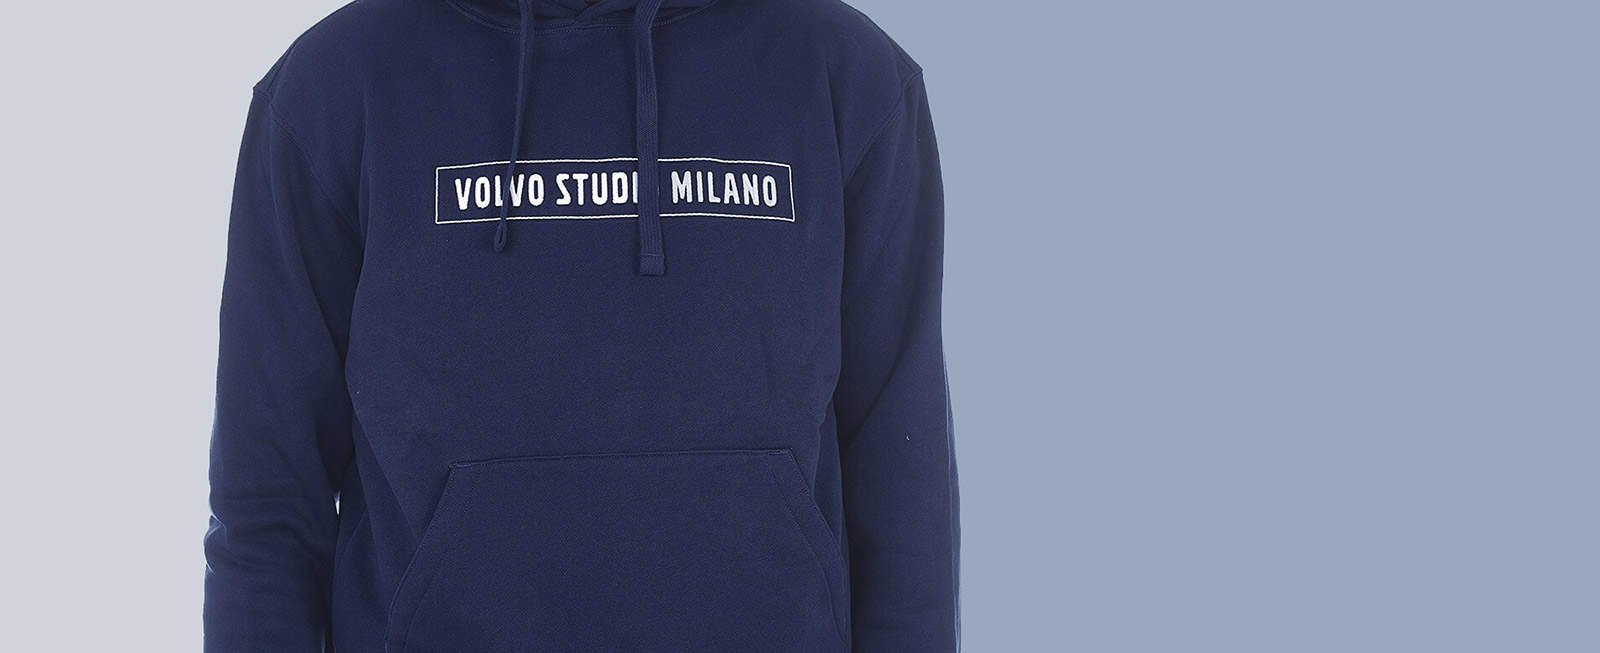 Volvo Studio Milano Collection